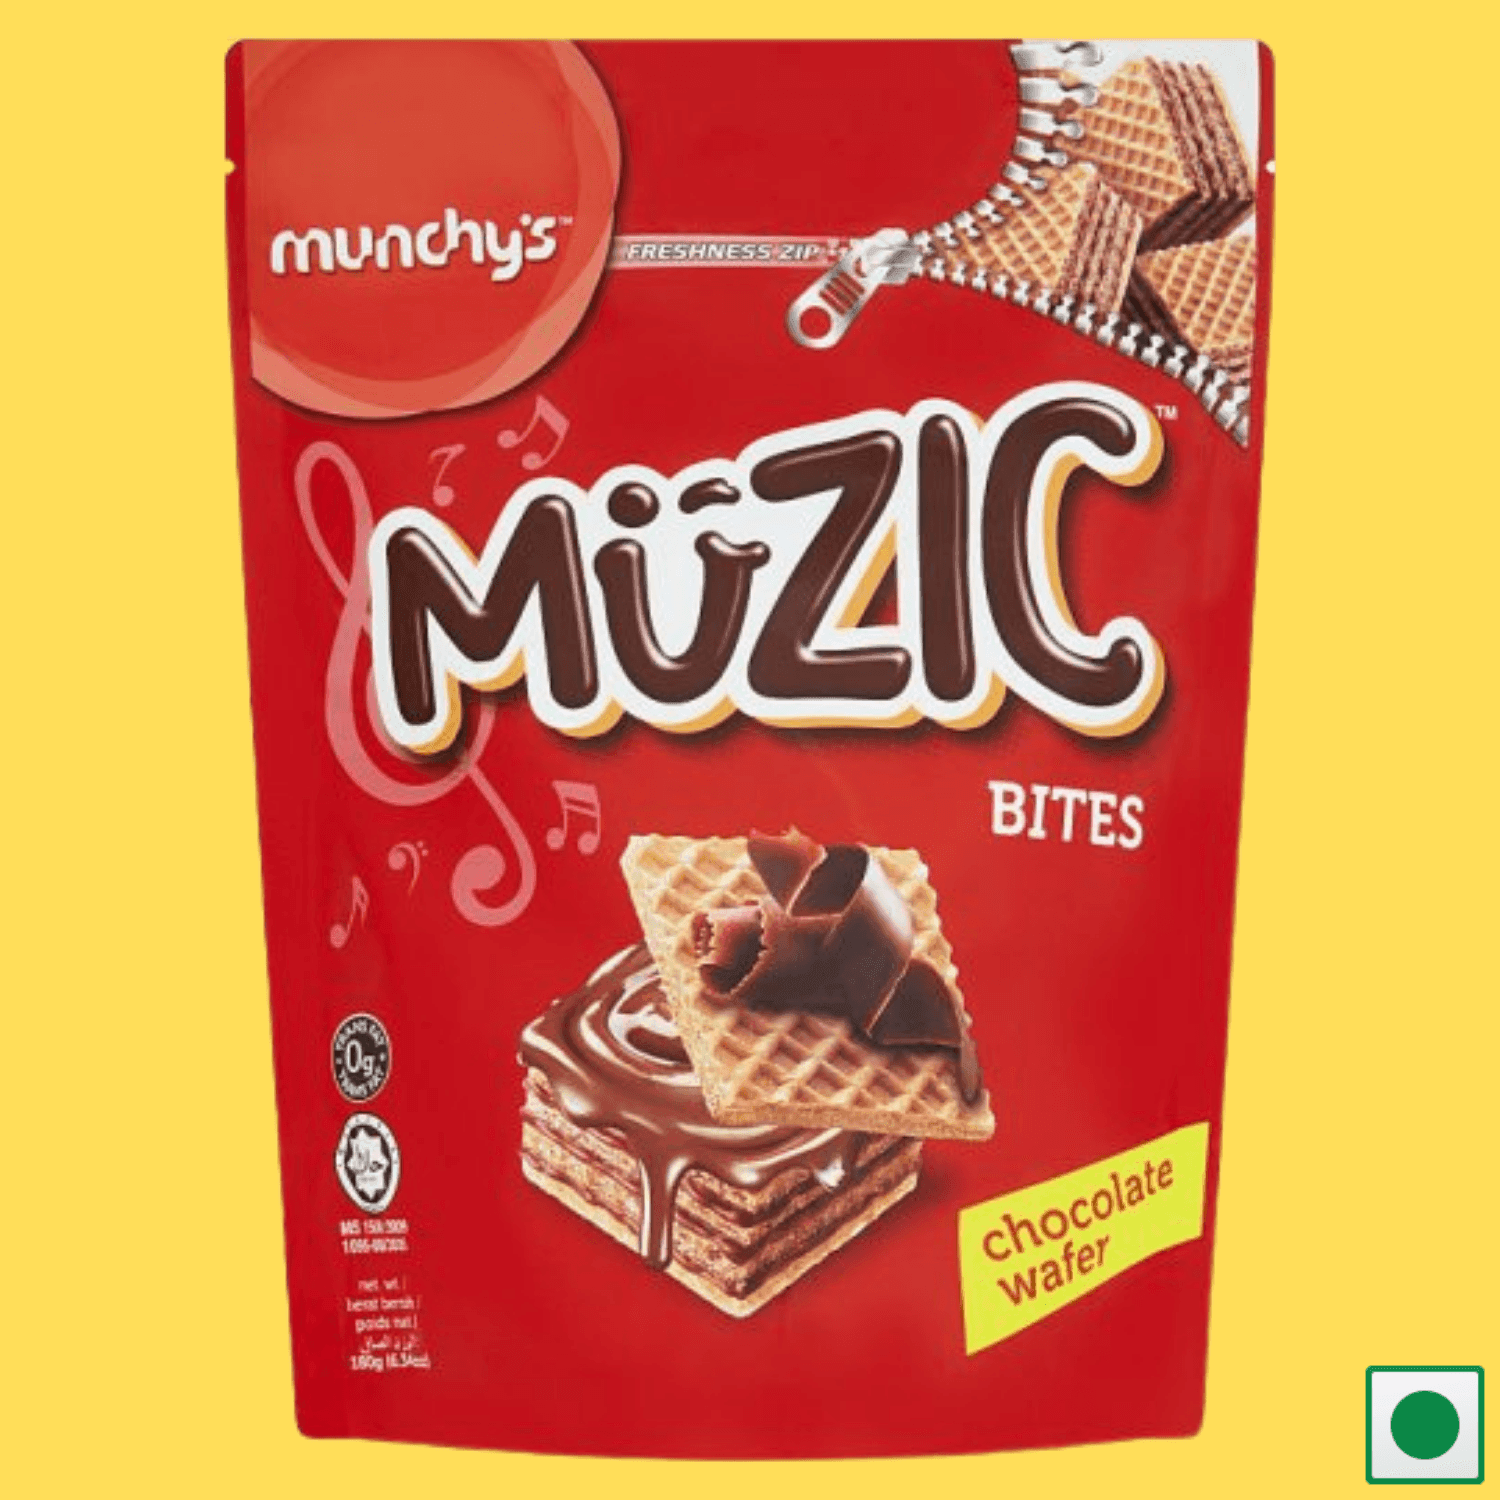 Munchy's Muzic Bites-Chocolate Wafer, 180g (Imported) - Super 7 Mart